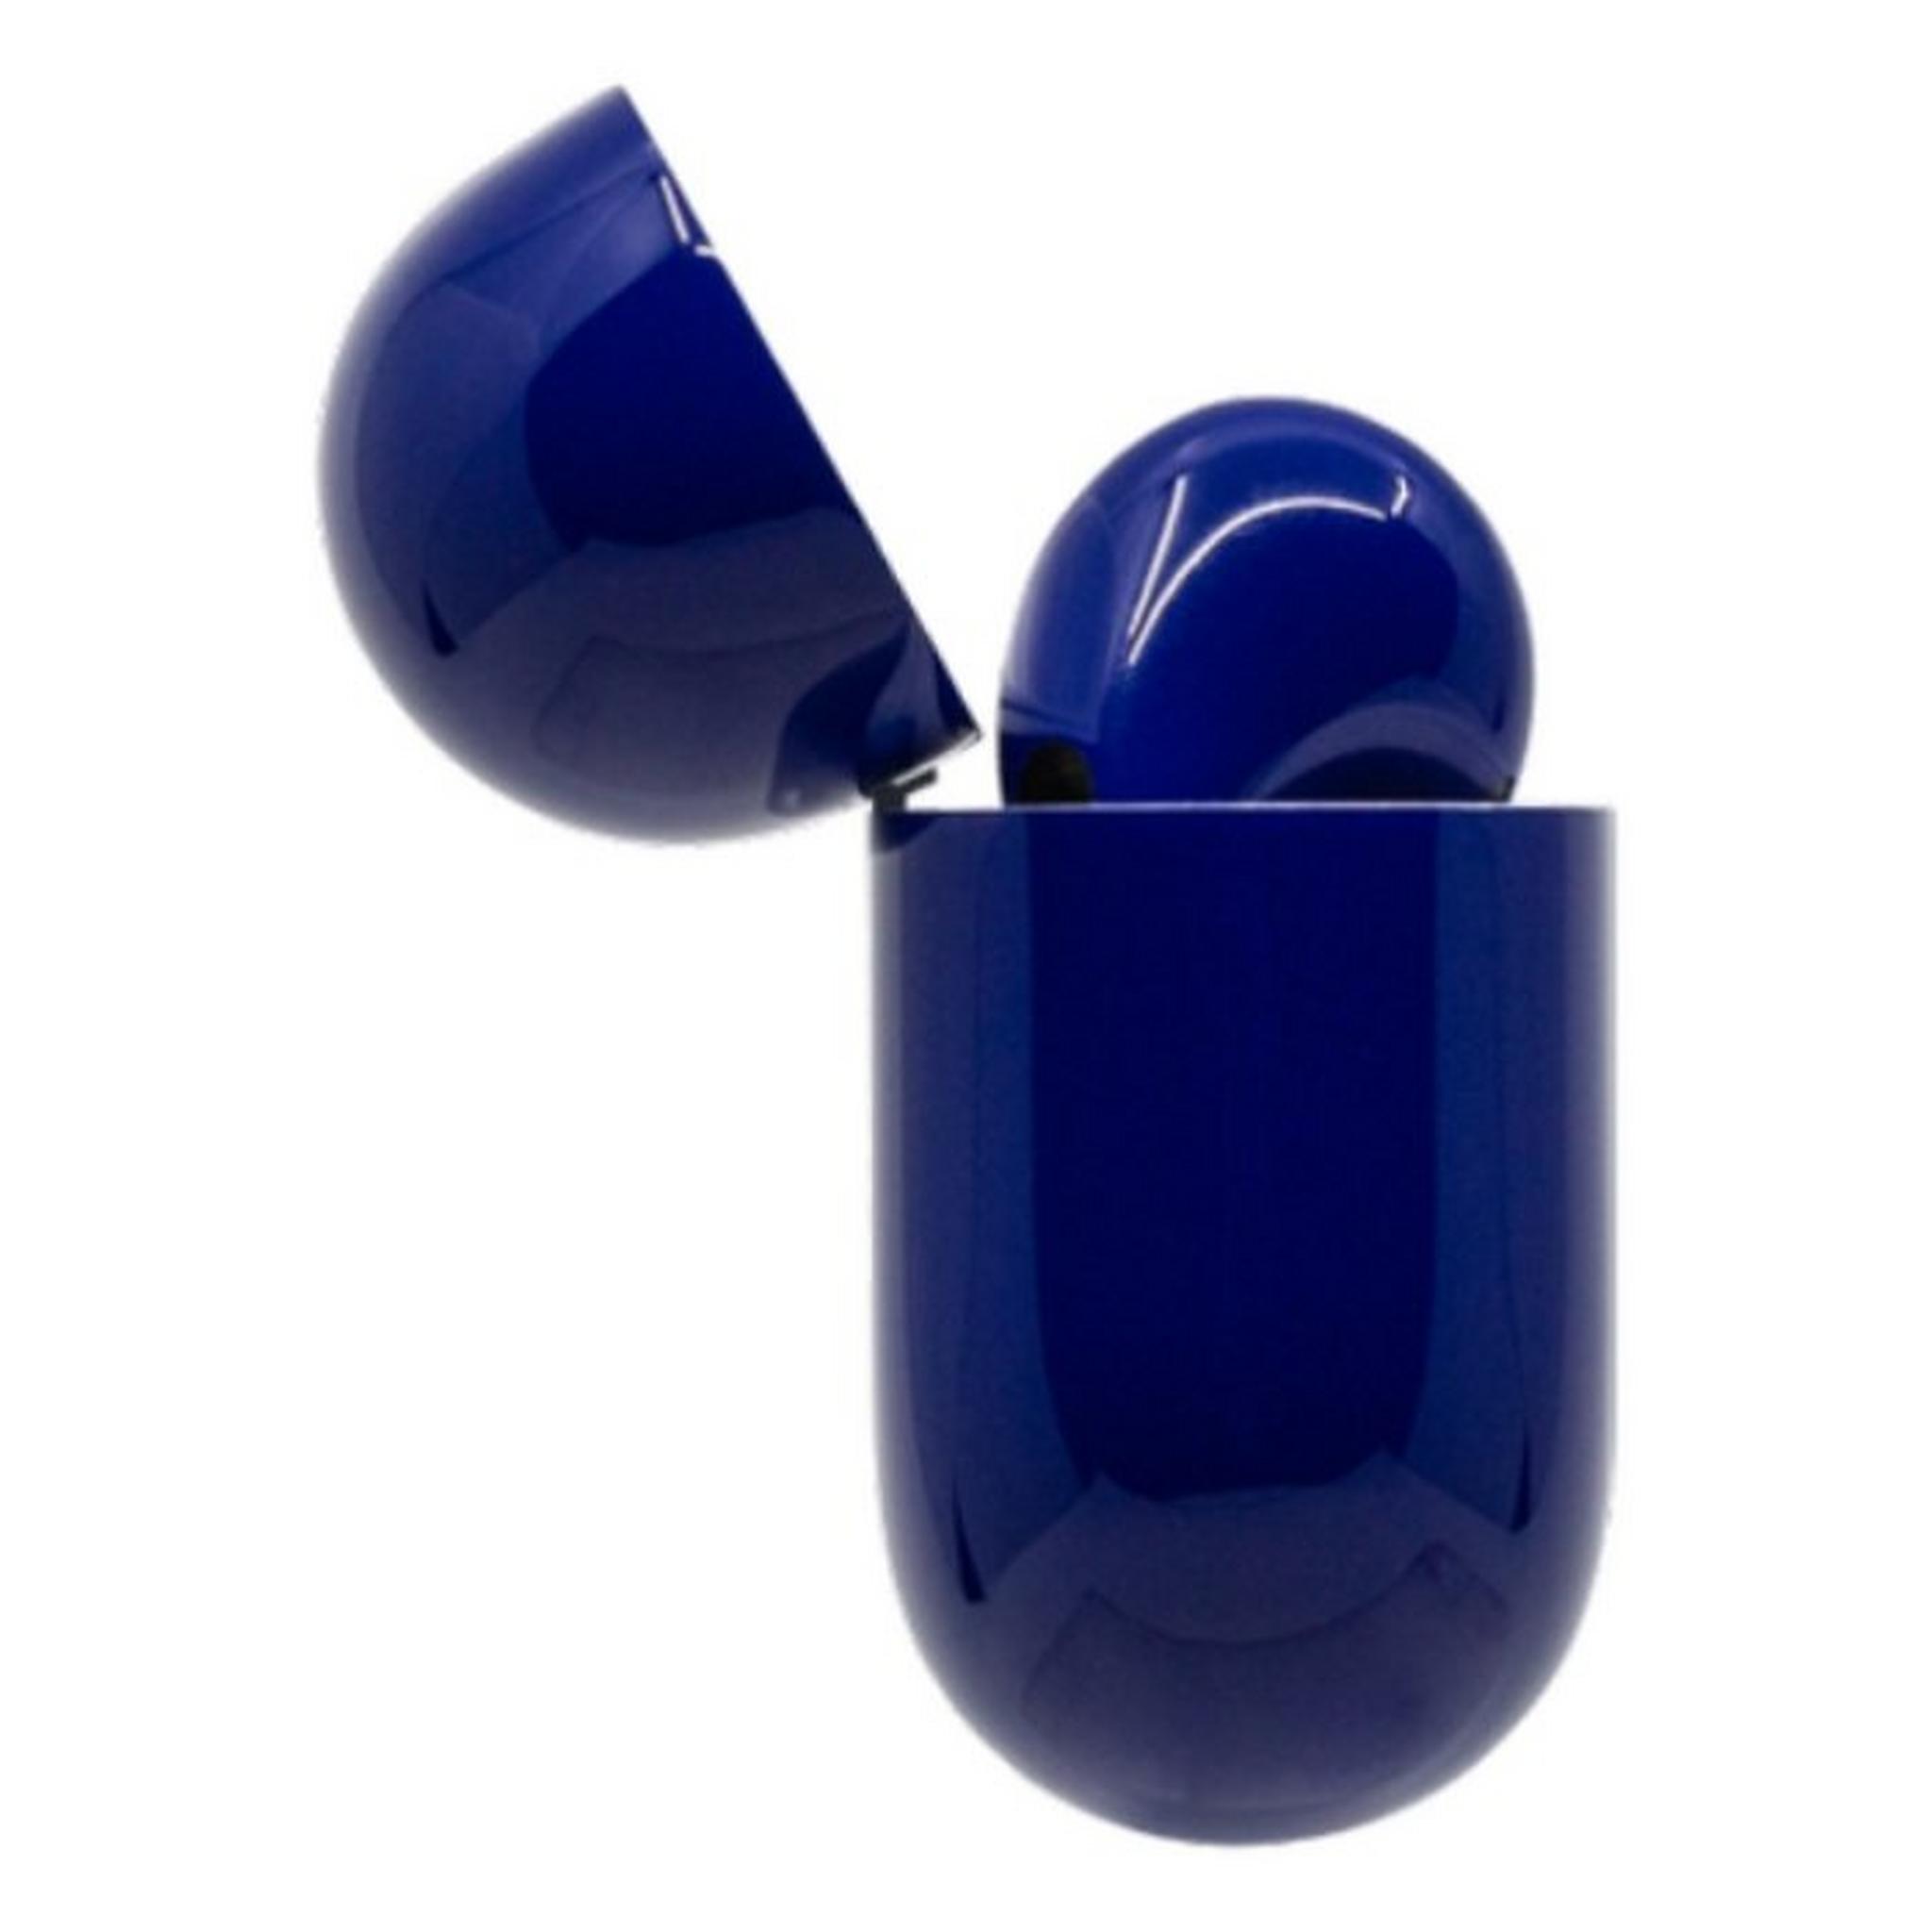 Switch Paint Airpods Pro MagSafe - Cobalt Blue Gloss